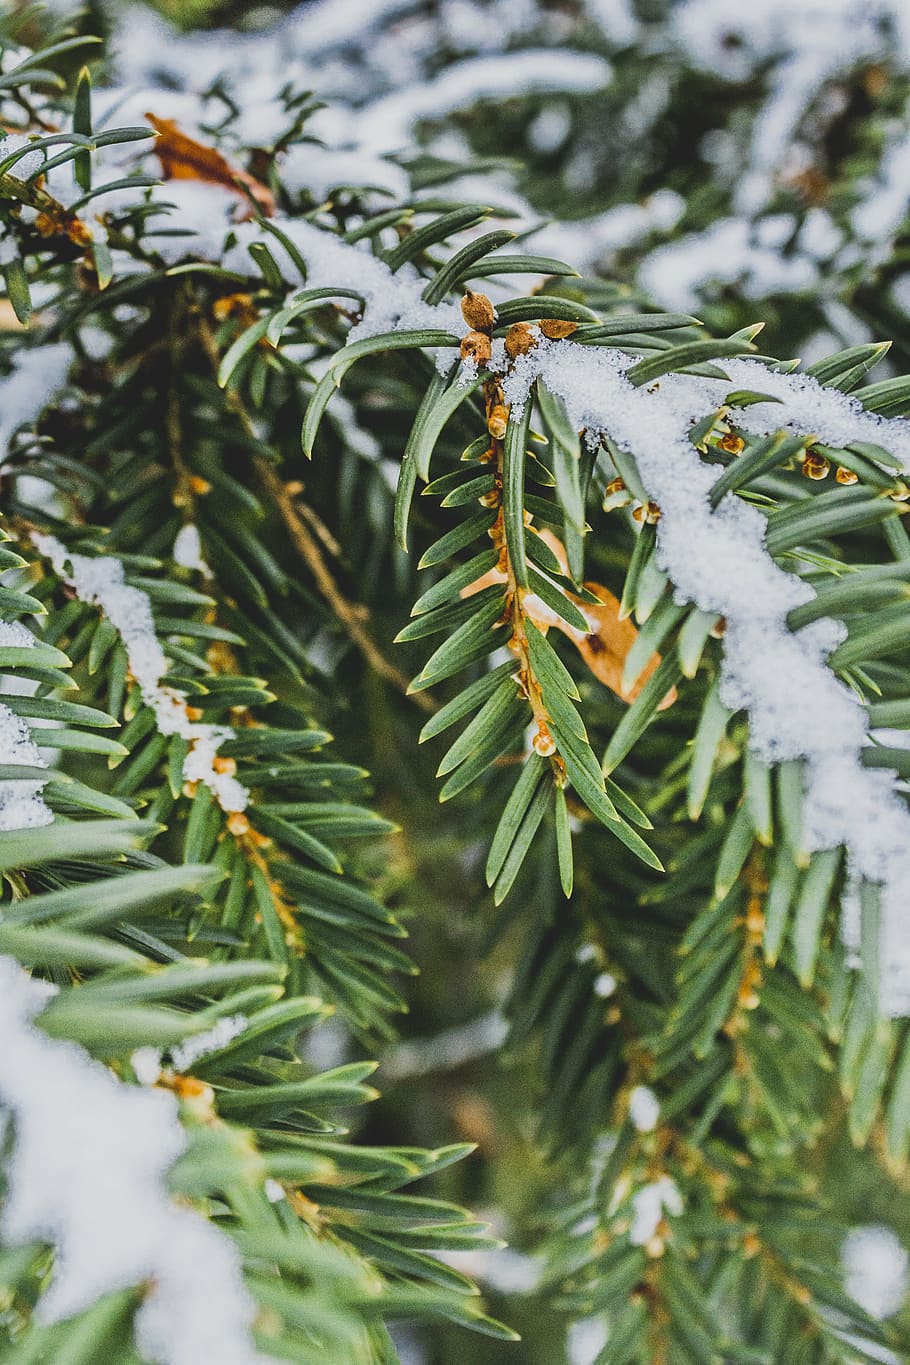 agujas, pino, invierno, nieve, verde, naturaleza, árbol, ramitas, árbol de navidad, iglak